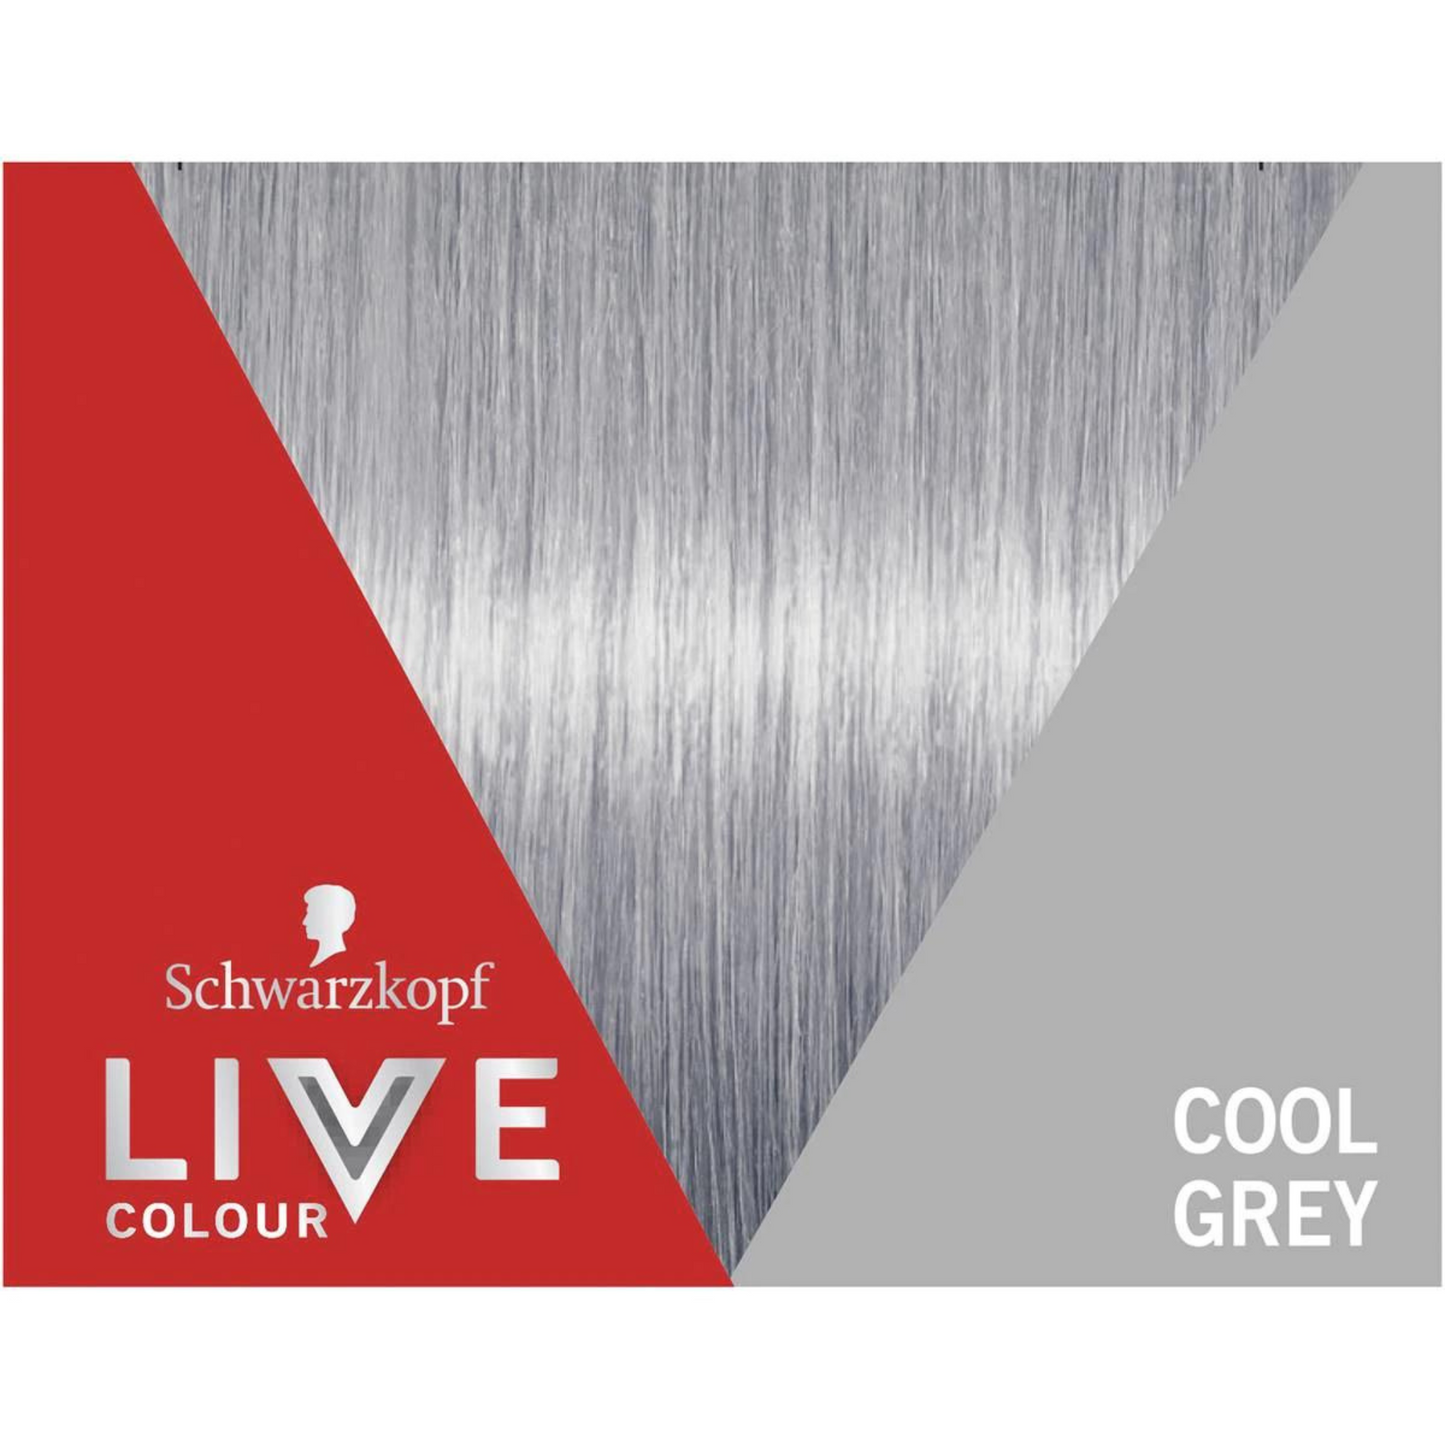 Schwarzkopf Live Colour Pastels Semi-Permanent Hair Colour Cool Grey 1 Kit